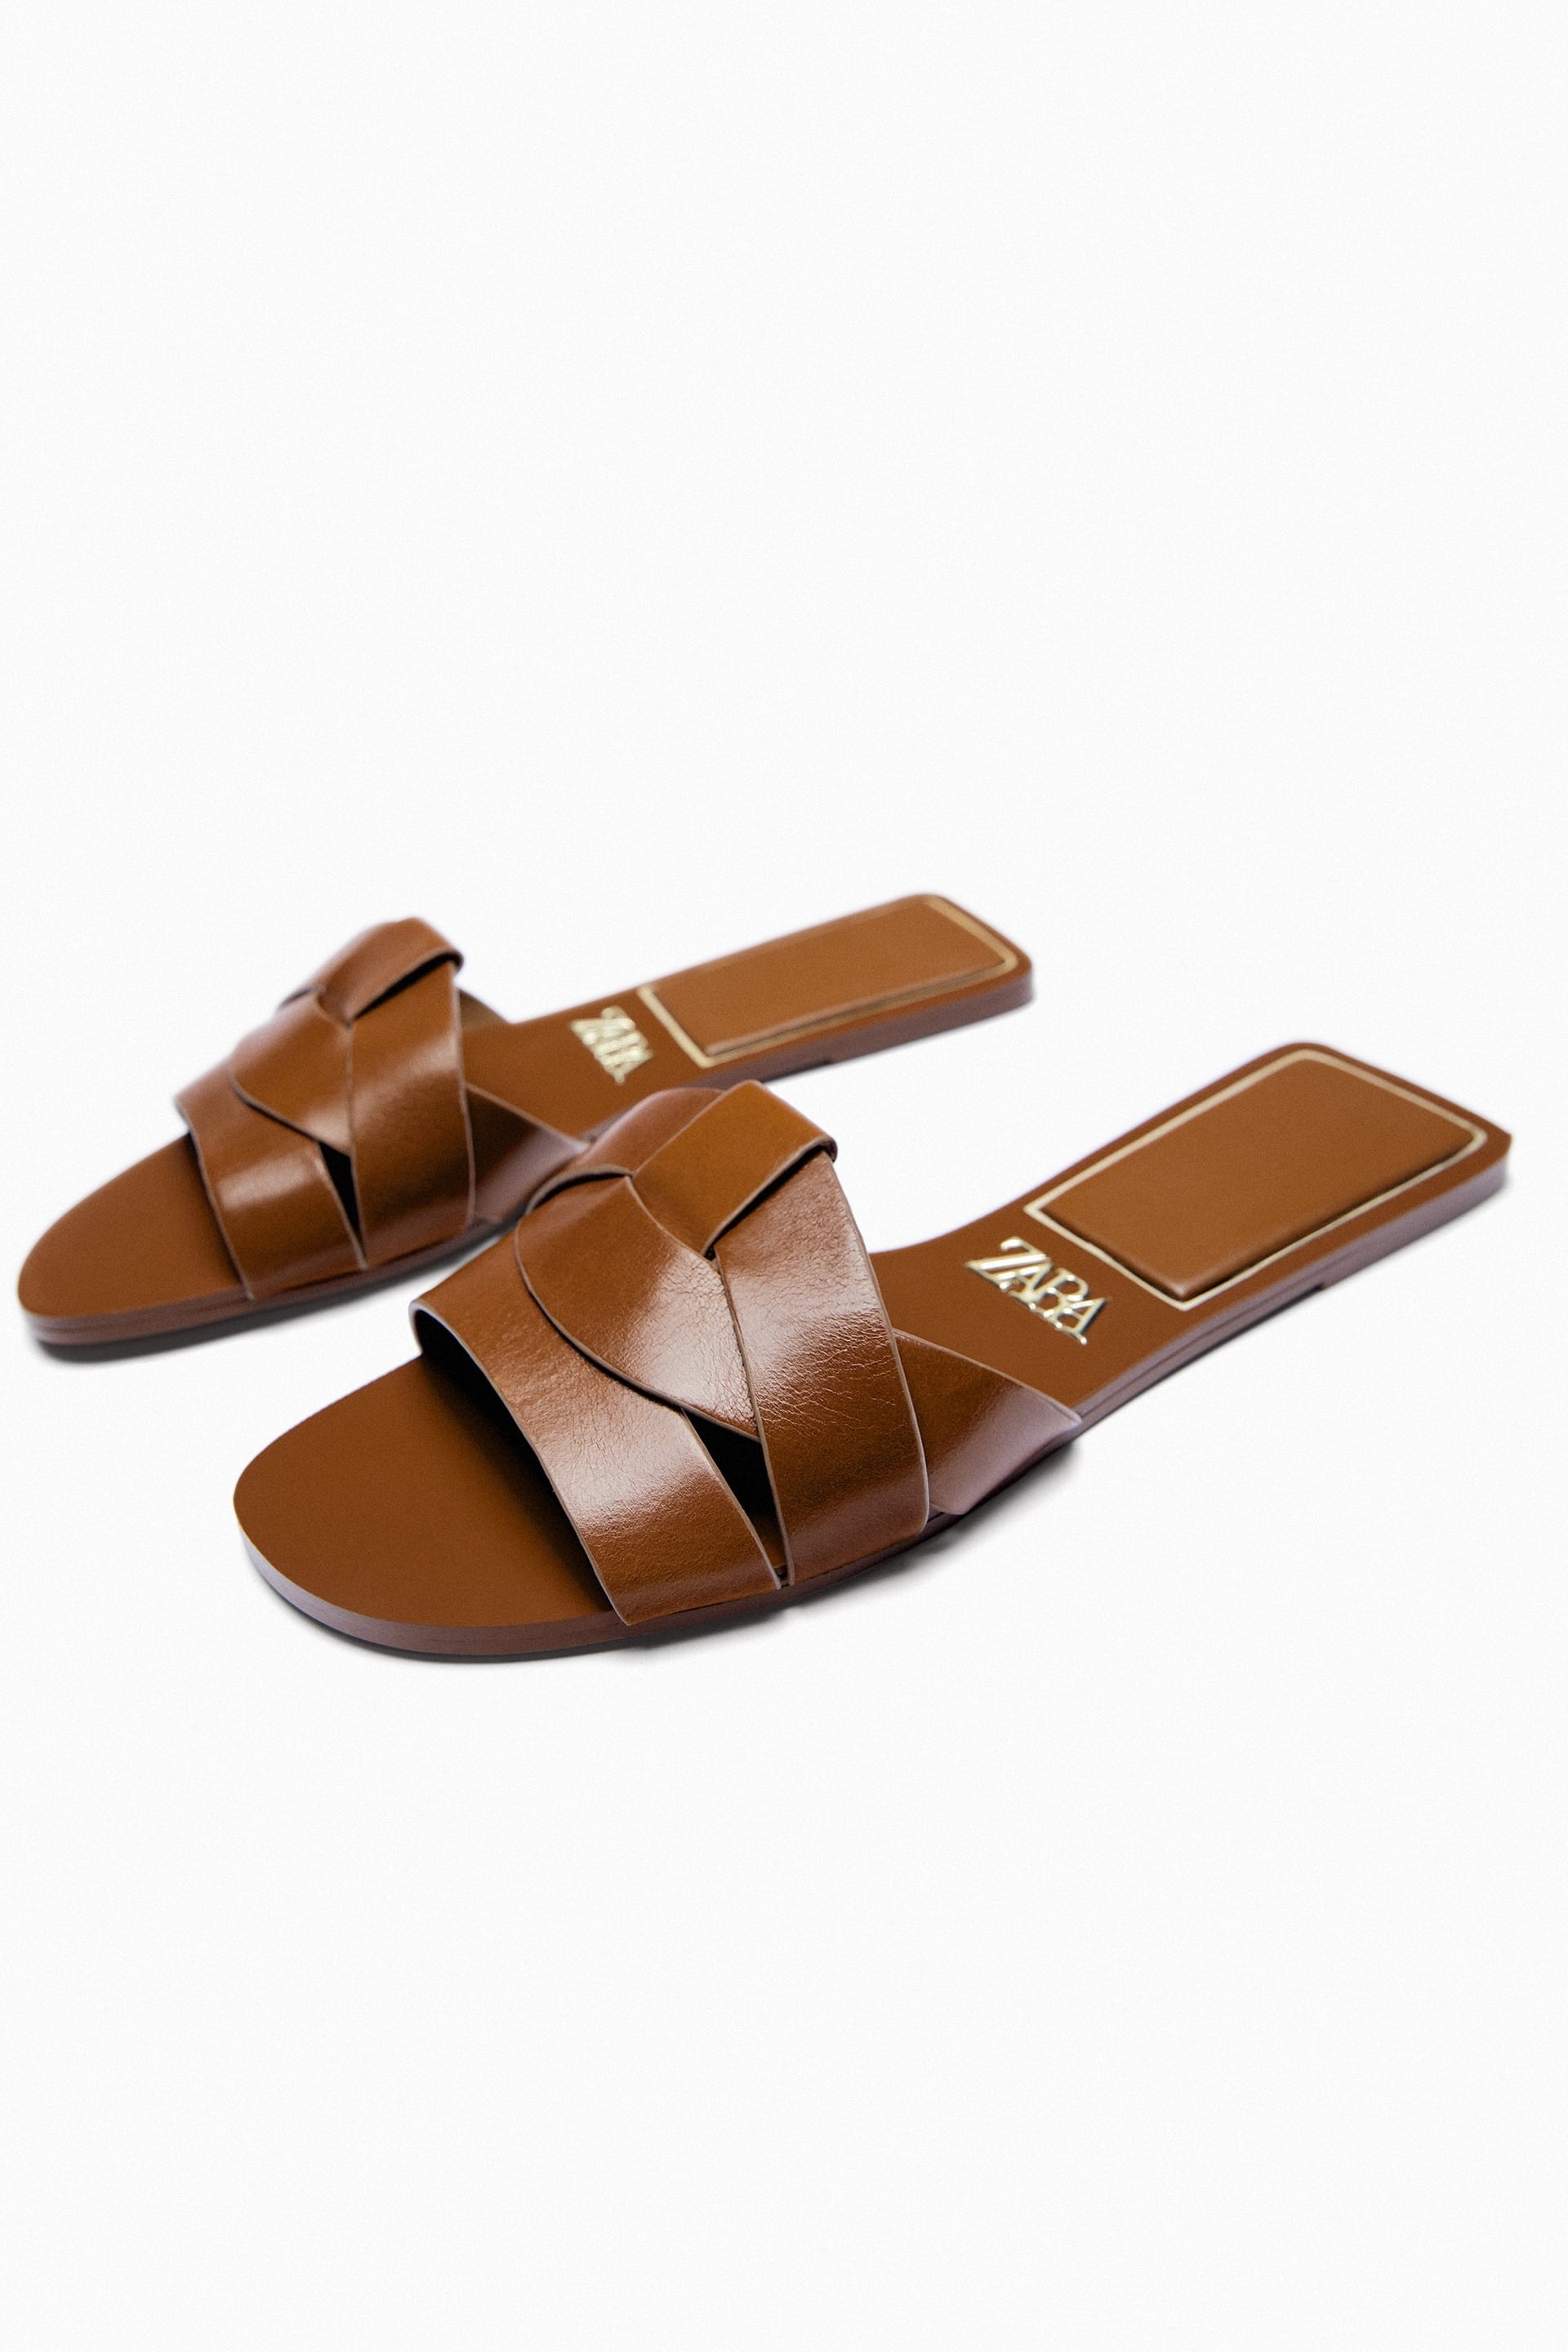 Authentic Loriblu Leather Italian Designer Sandals Black New | eBay